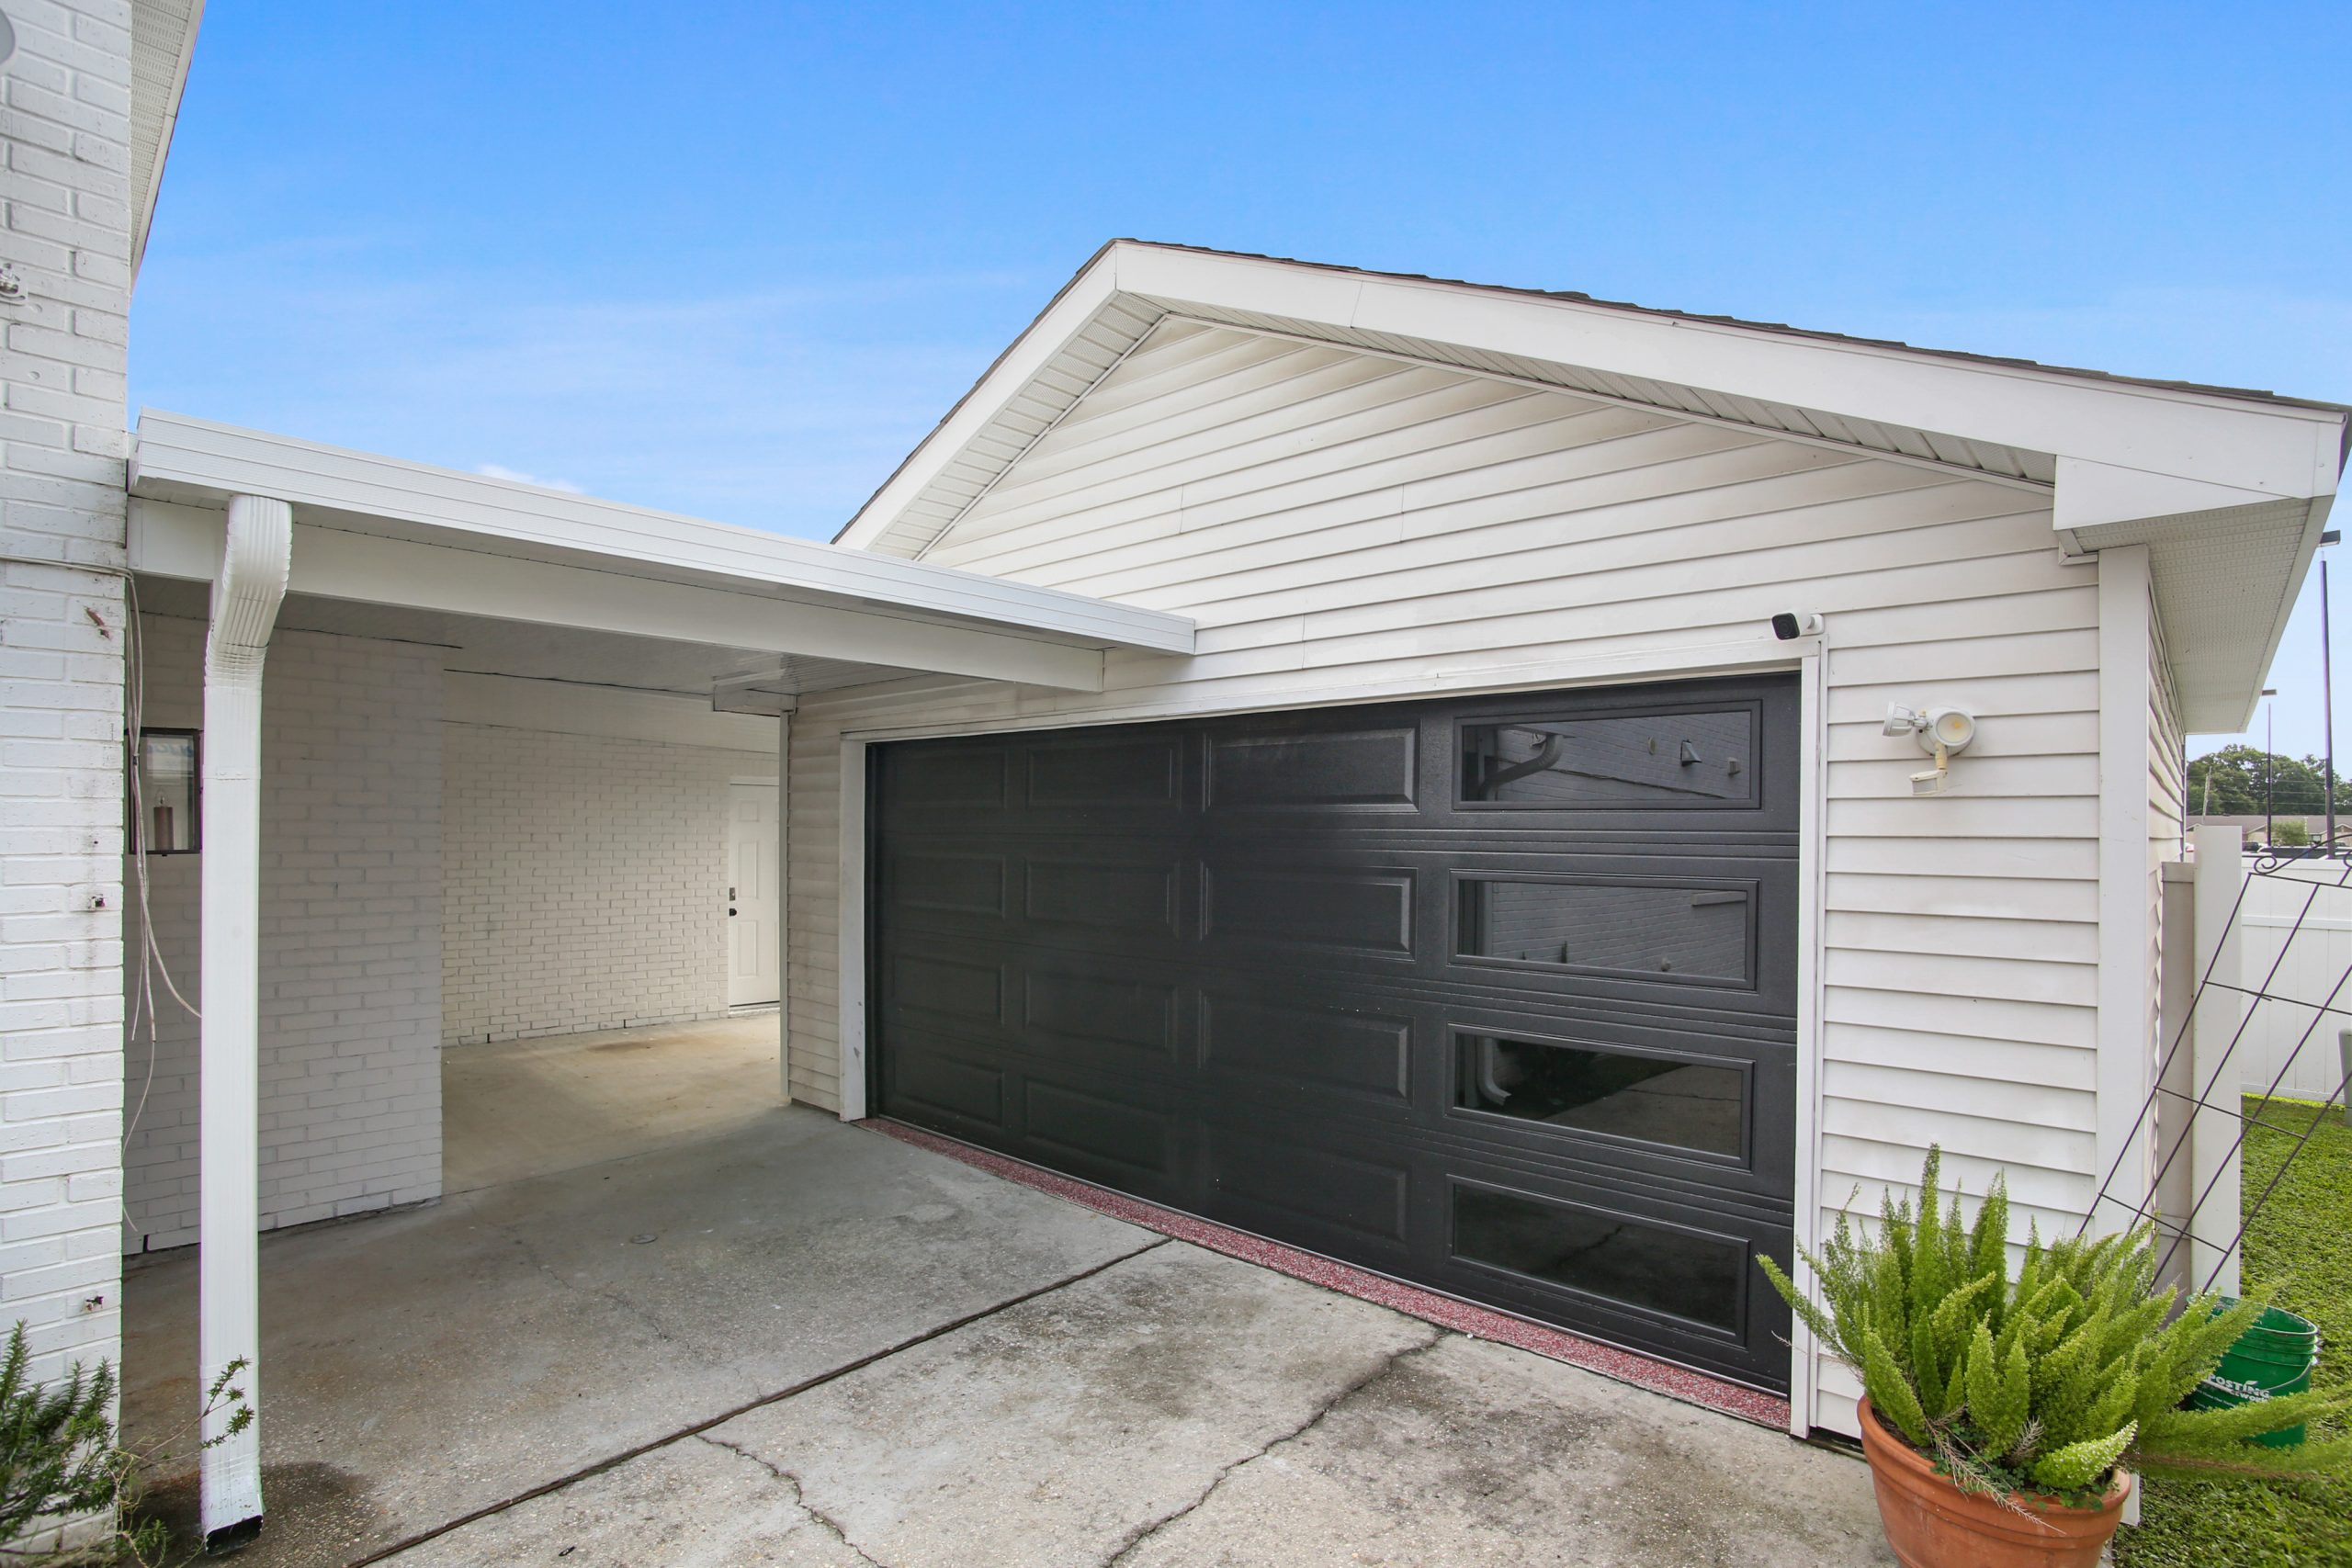 Steeple House Garage Home Addition designed and built by DMG Design+Build